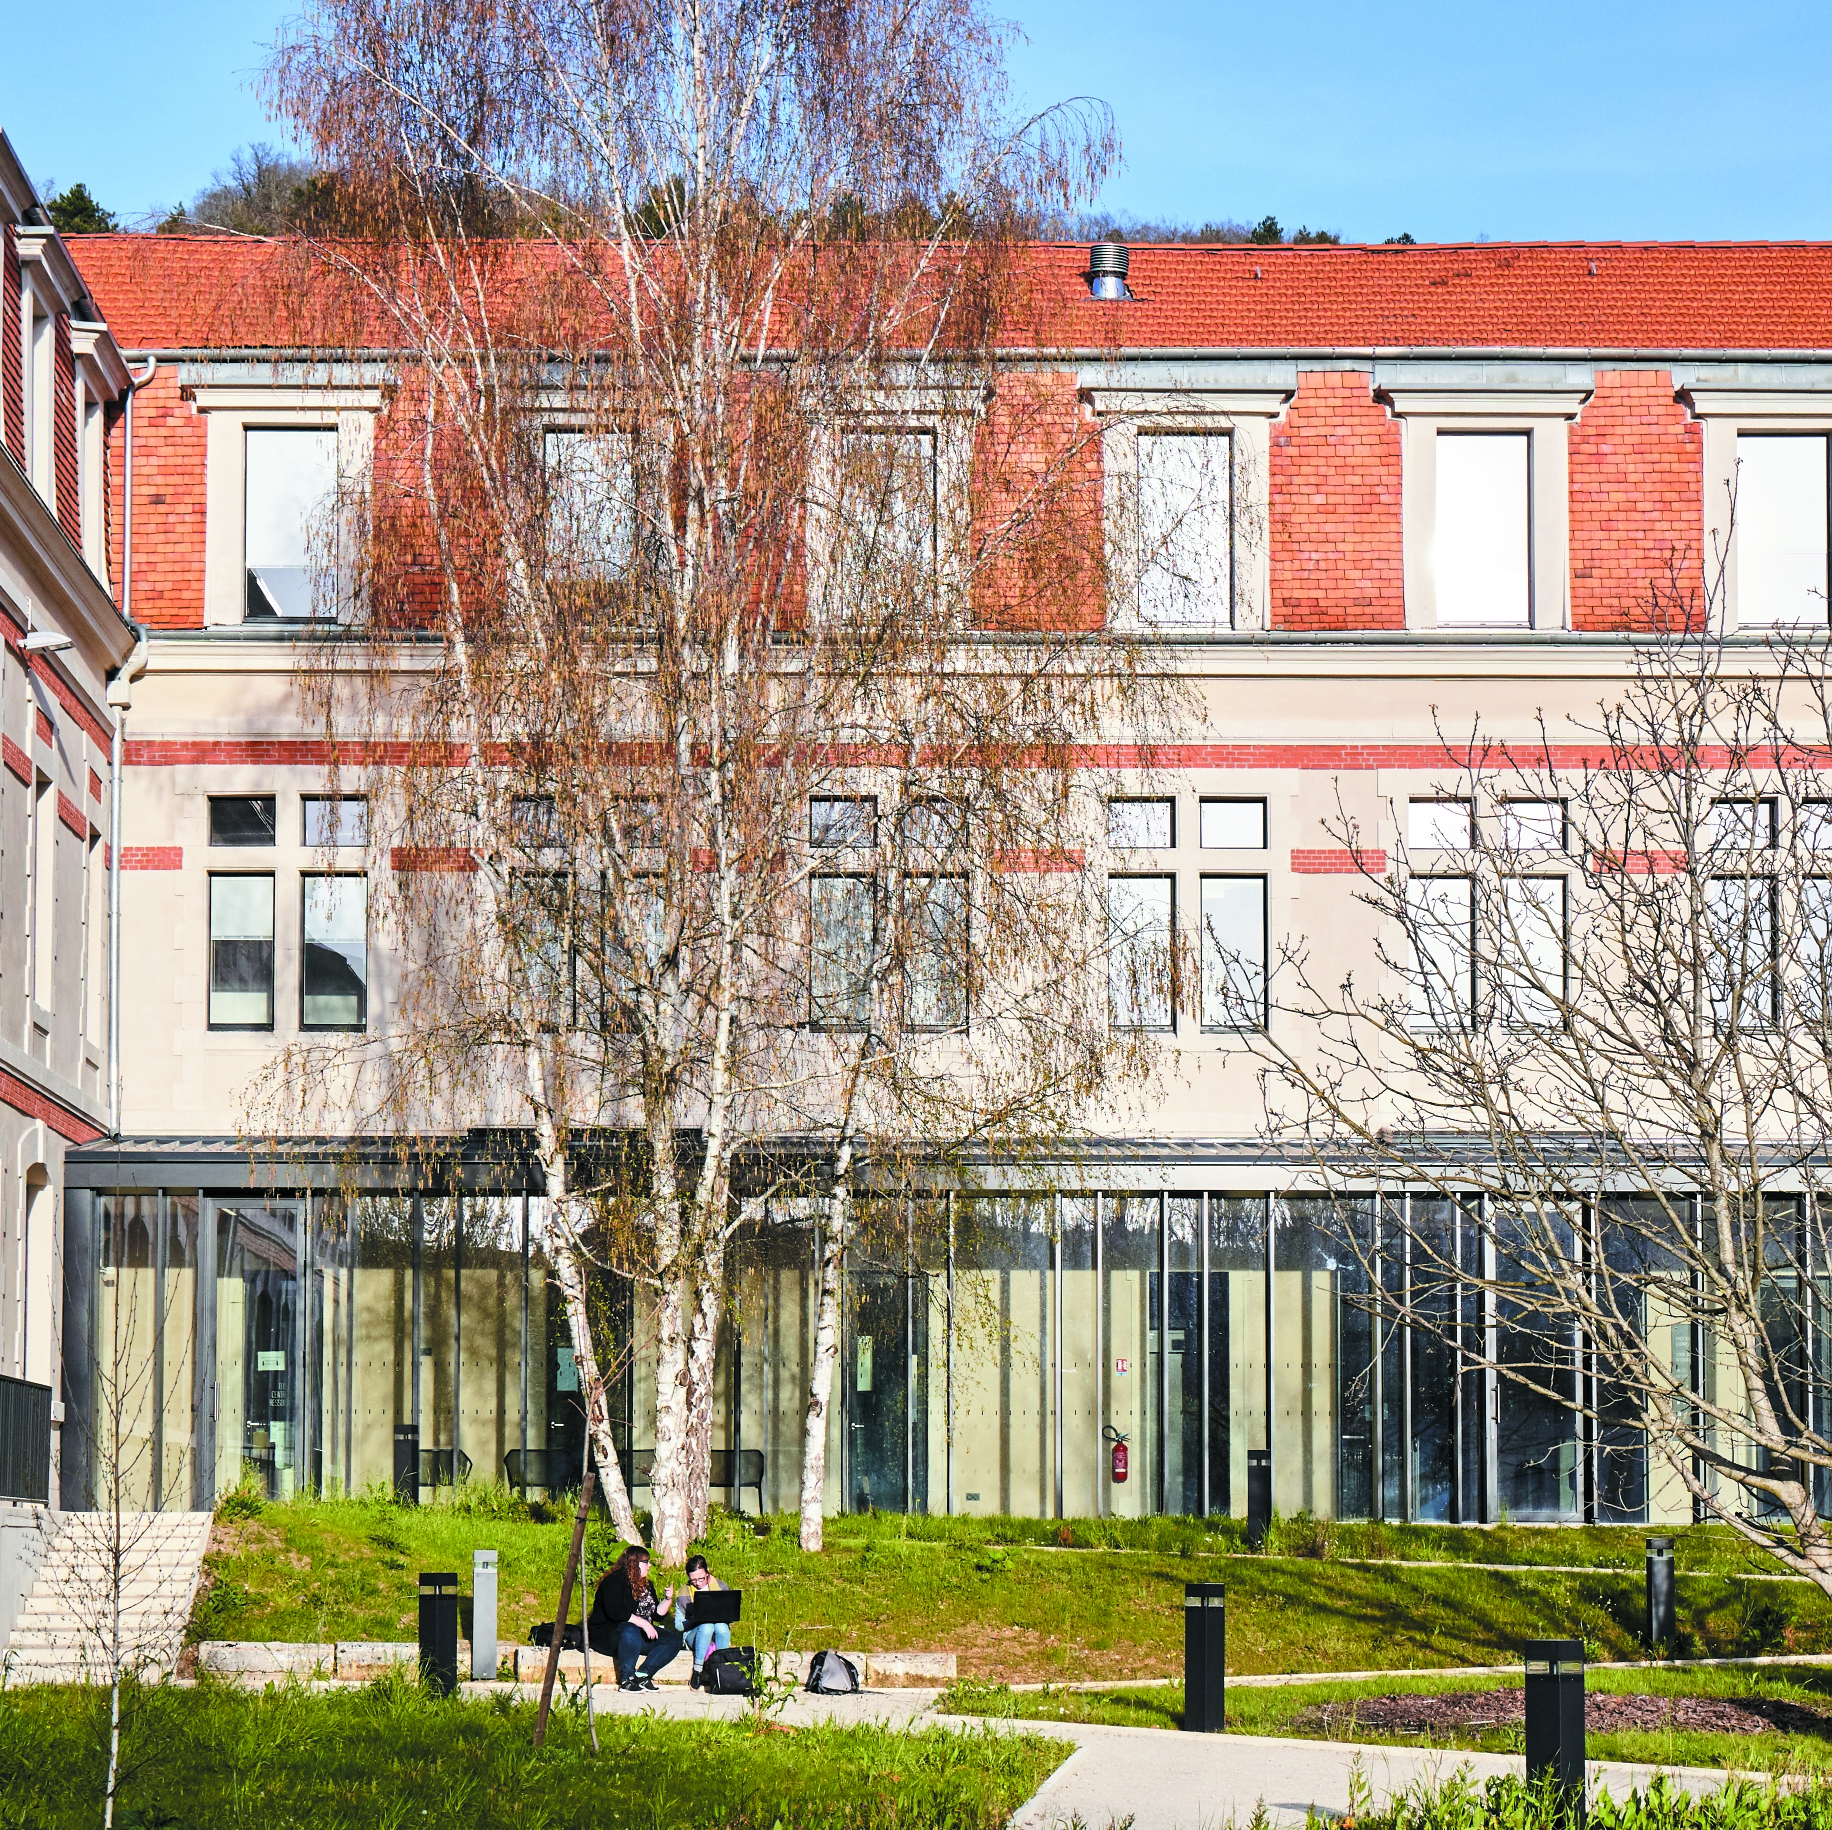 University Centre, Cahors, France - Image 6